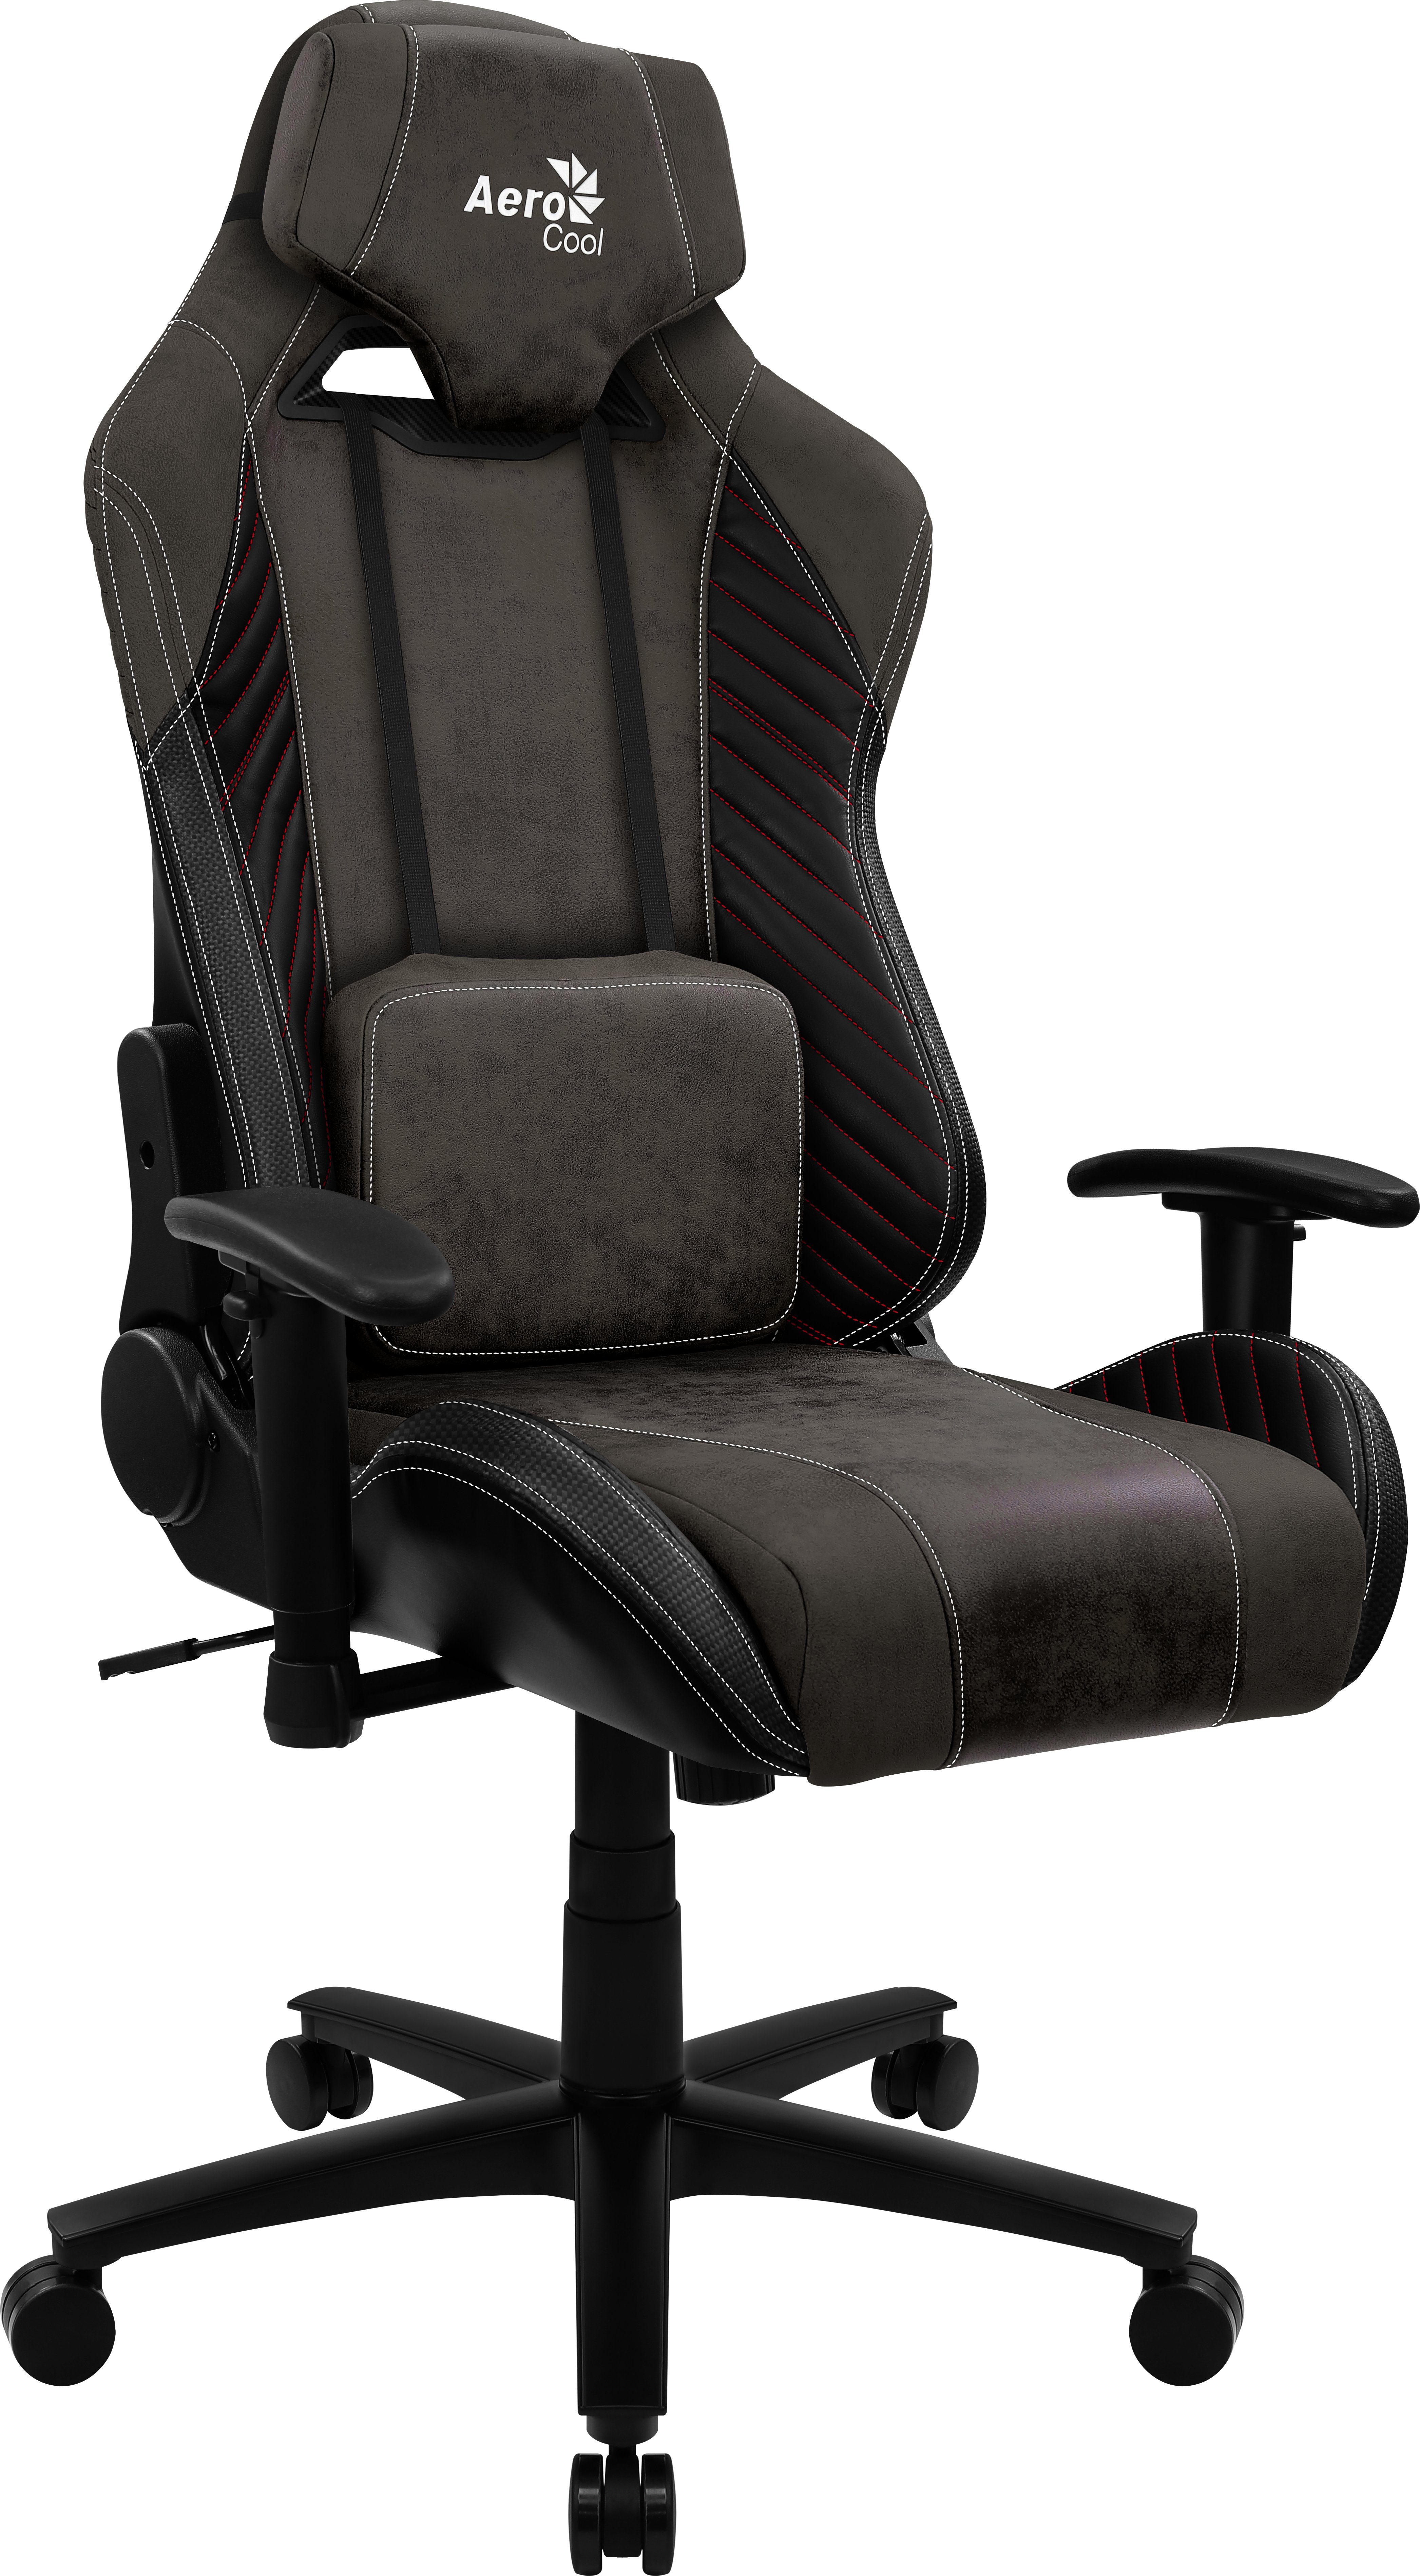 BARON Aerocool Maus AeroCool ergonomische Chair Gaming